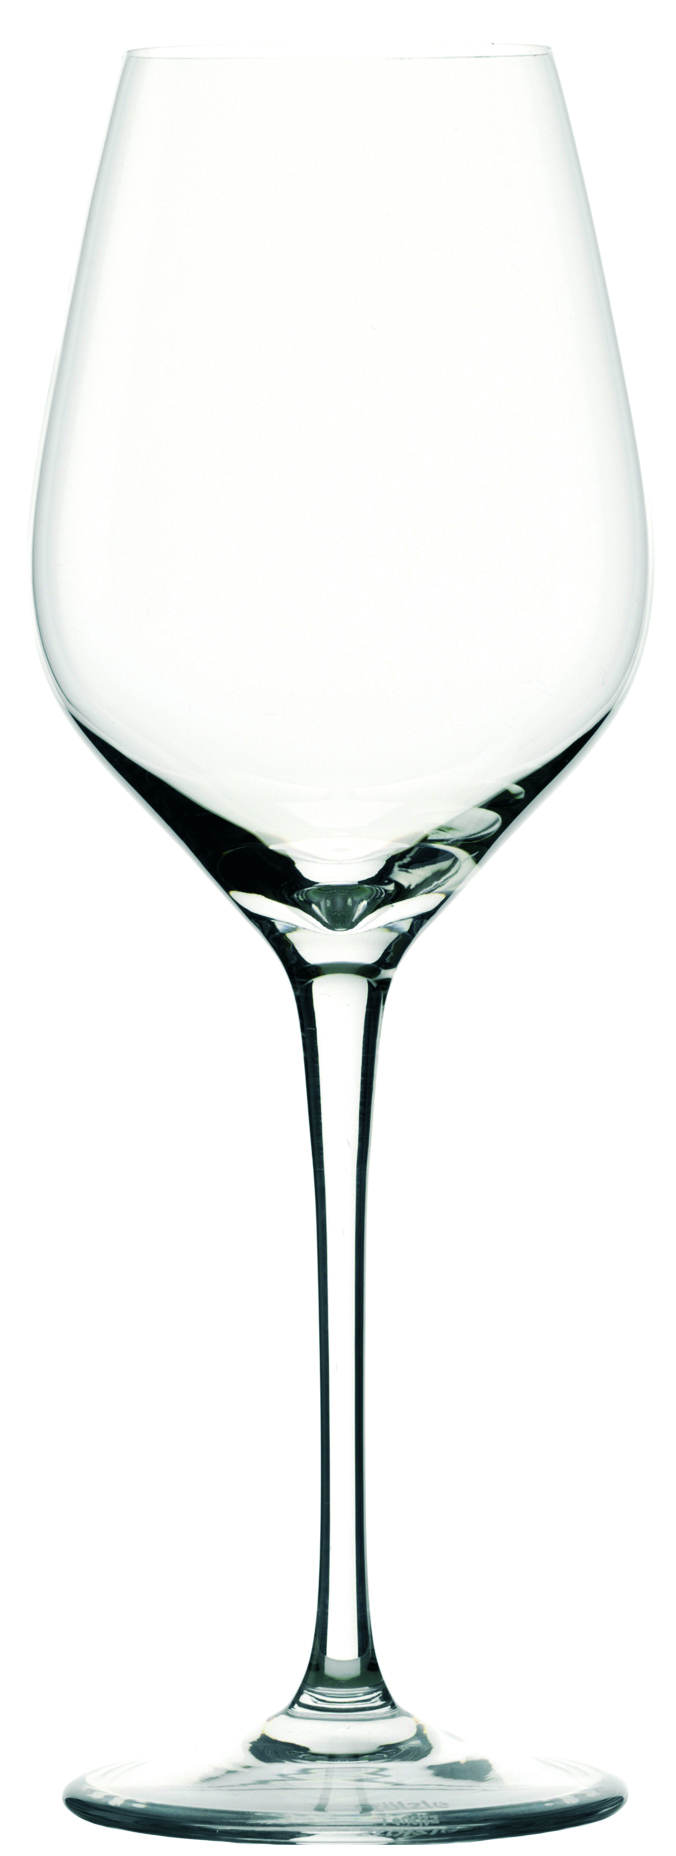 White wine glass Exquisit Royal, Stölzle Lausitz - 350ml (1 pc.)